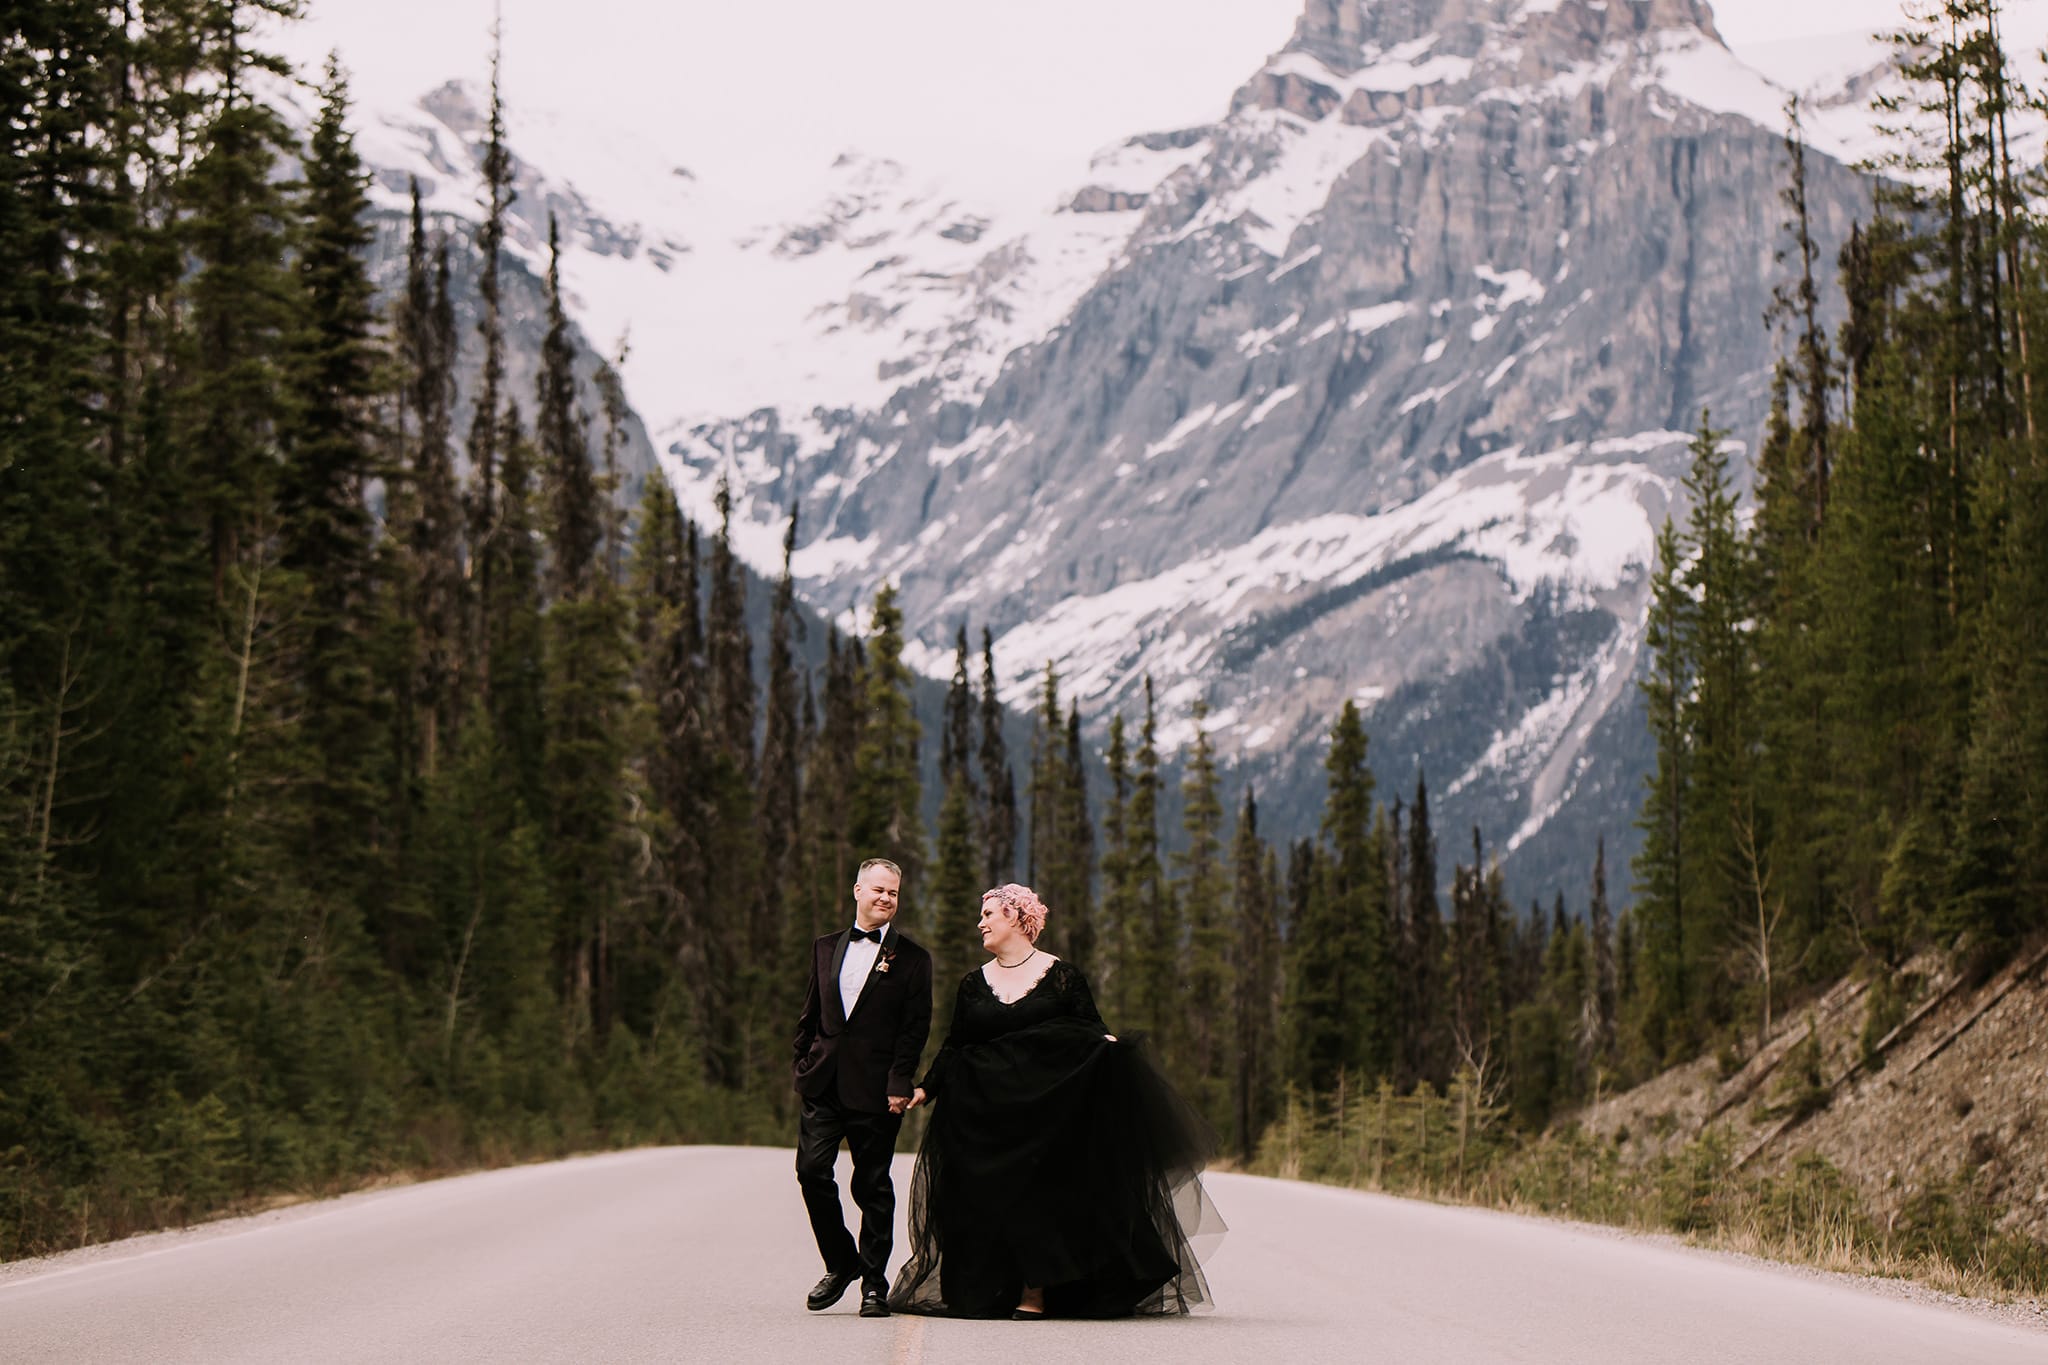 alternative wedding bride black wedding gown groom burgundy tuxedo walking road in mountains